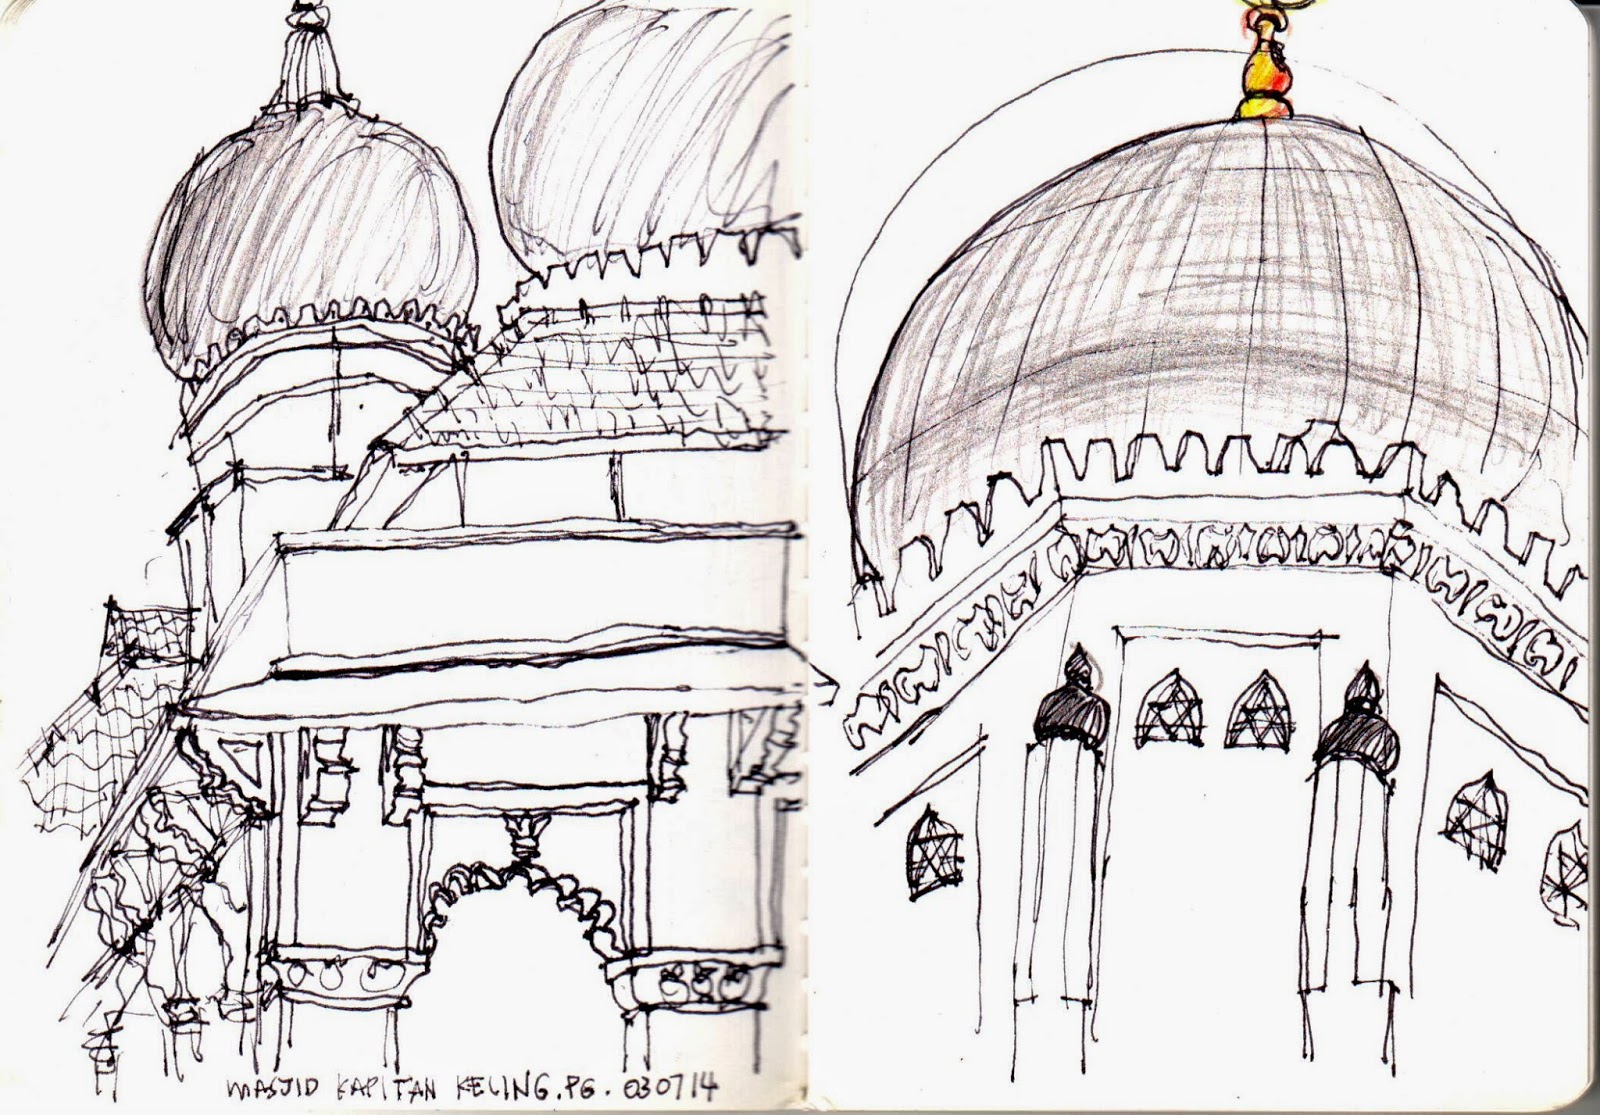  Artsy Moments Sketch Masjid  Kapitan Keling